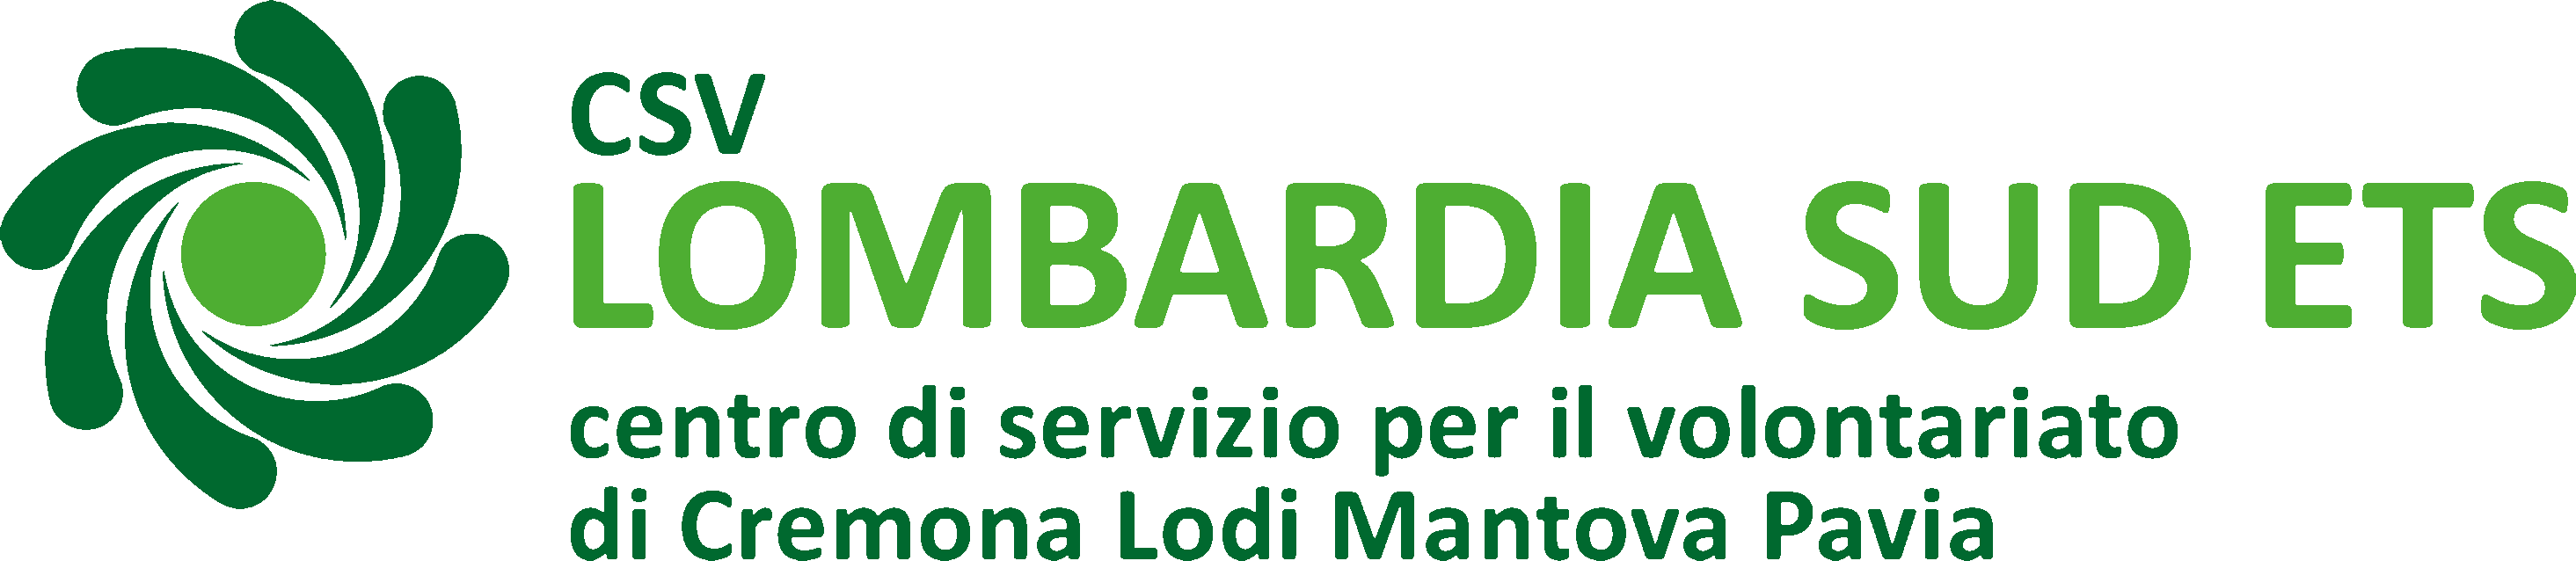 CSV Lombardia